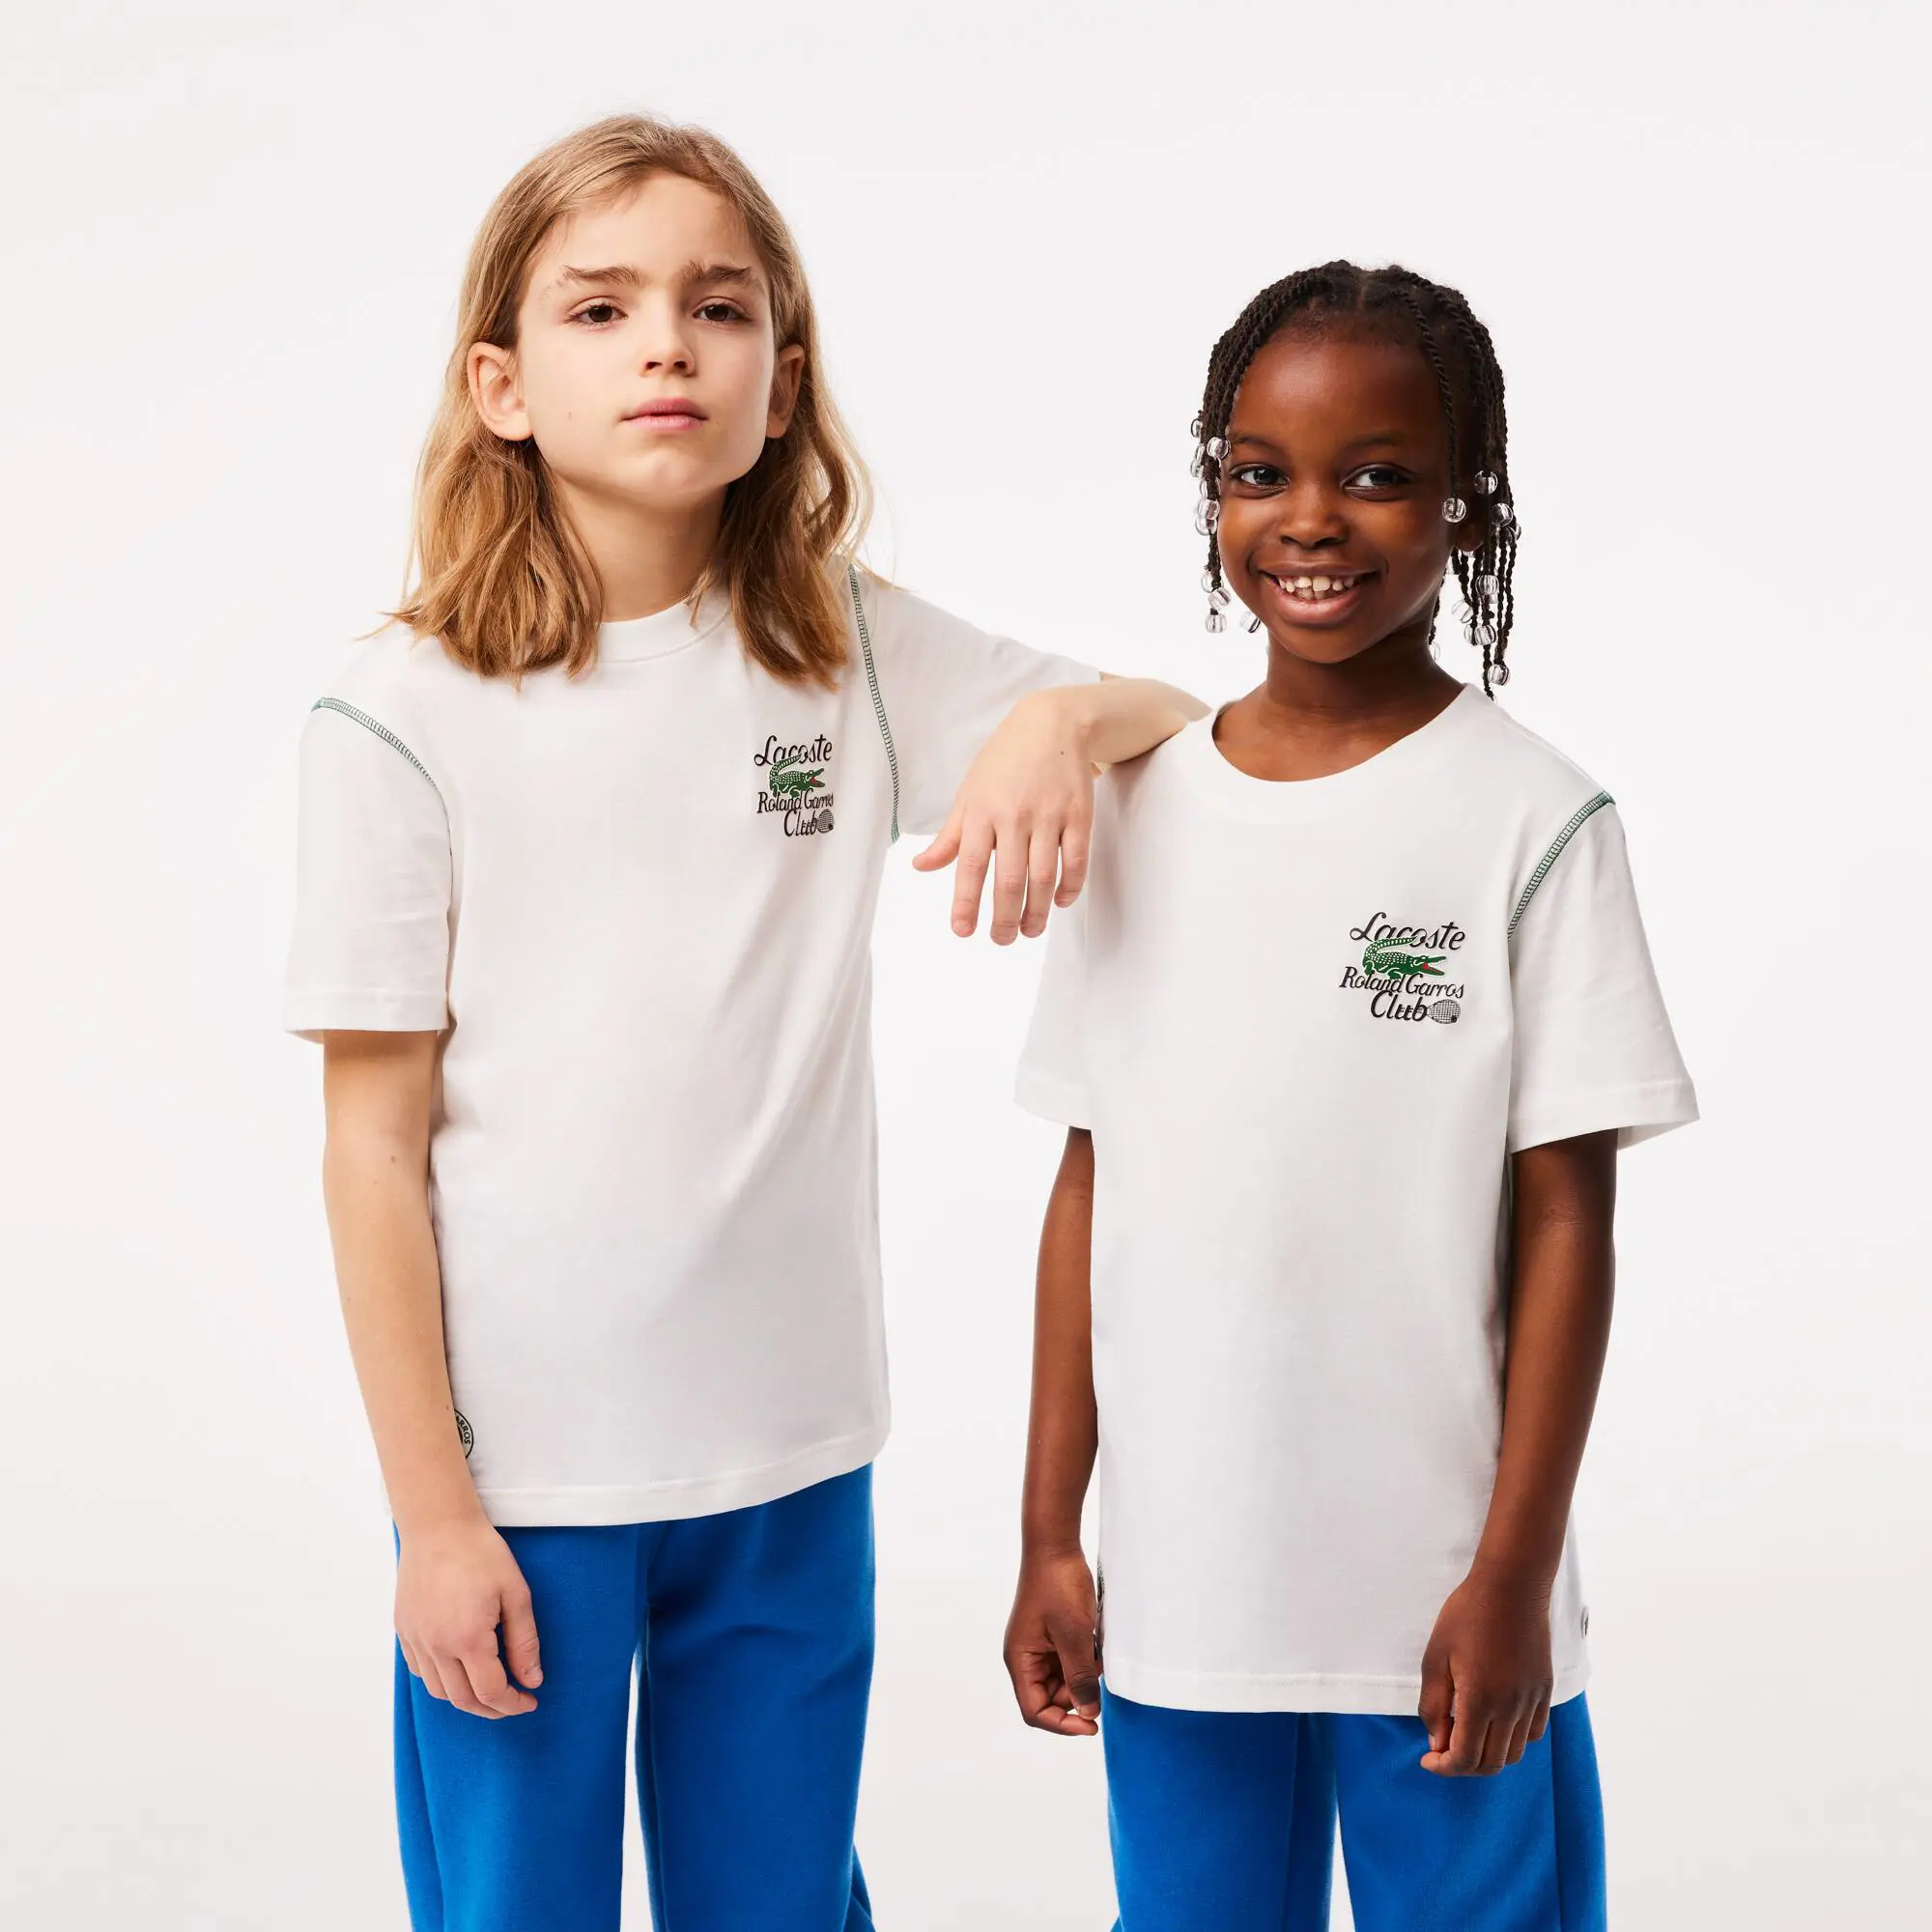 Lacoste Kids’ Lacoste Sport Roland Garros Edition Jersey T-shirt. 1